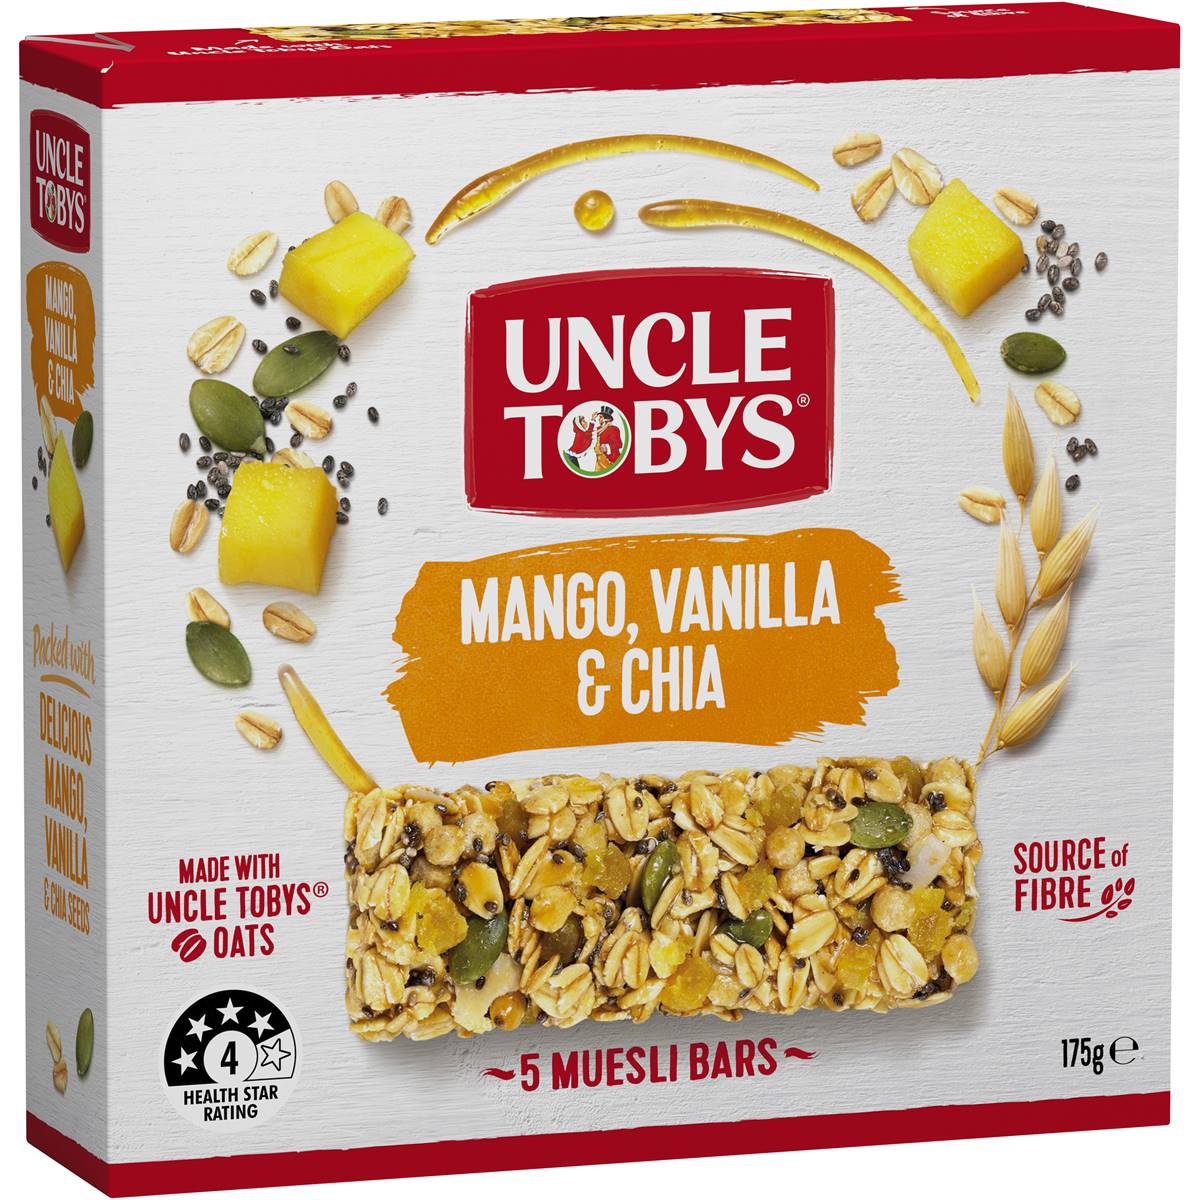 Uncle Tobys Mango Vanilla & Chia Muesli Bar